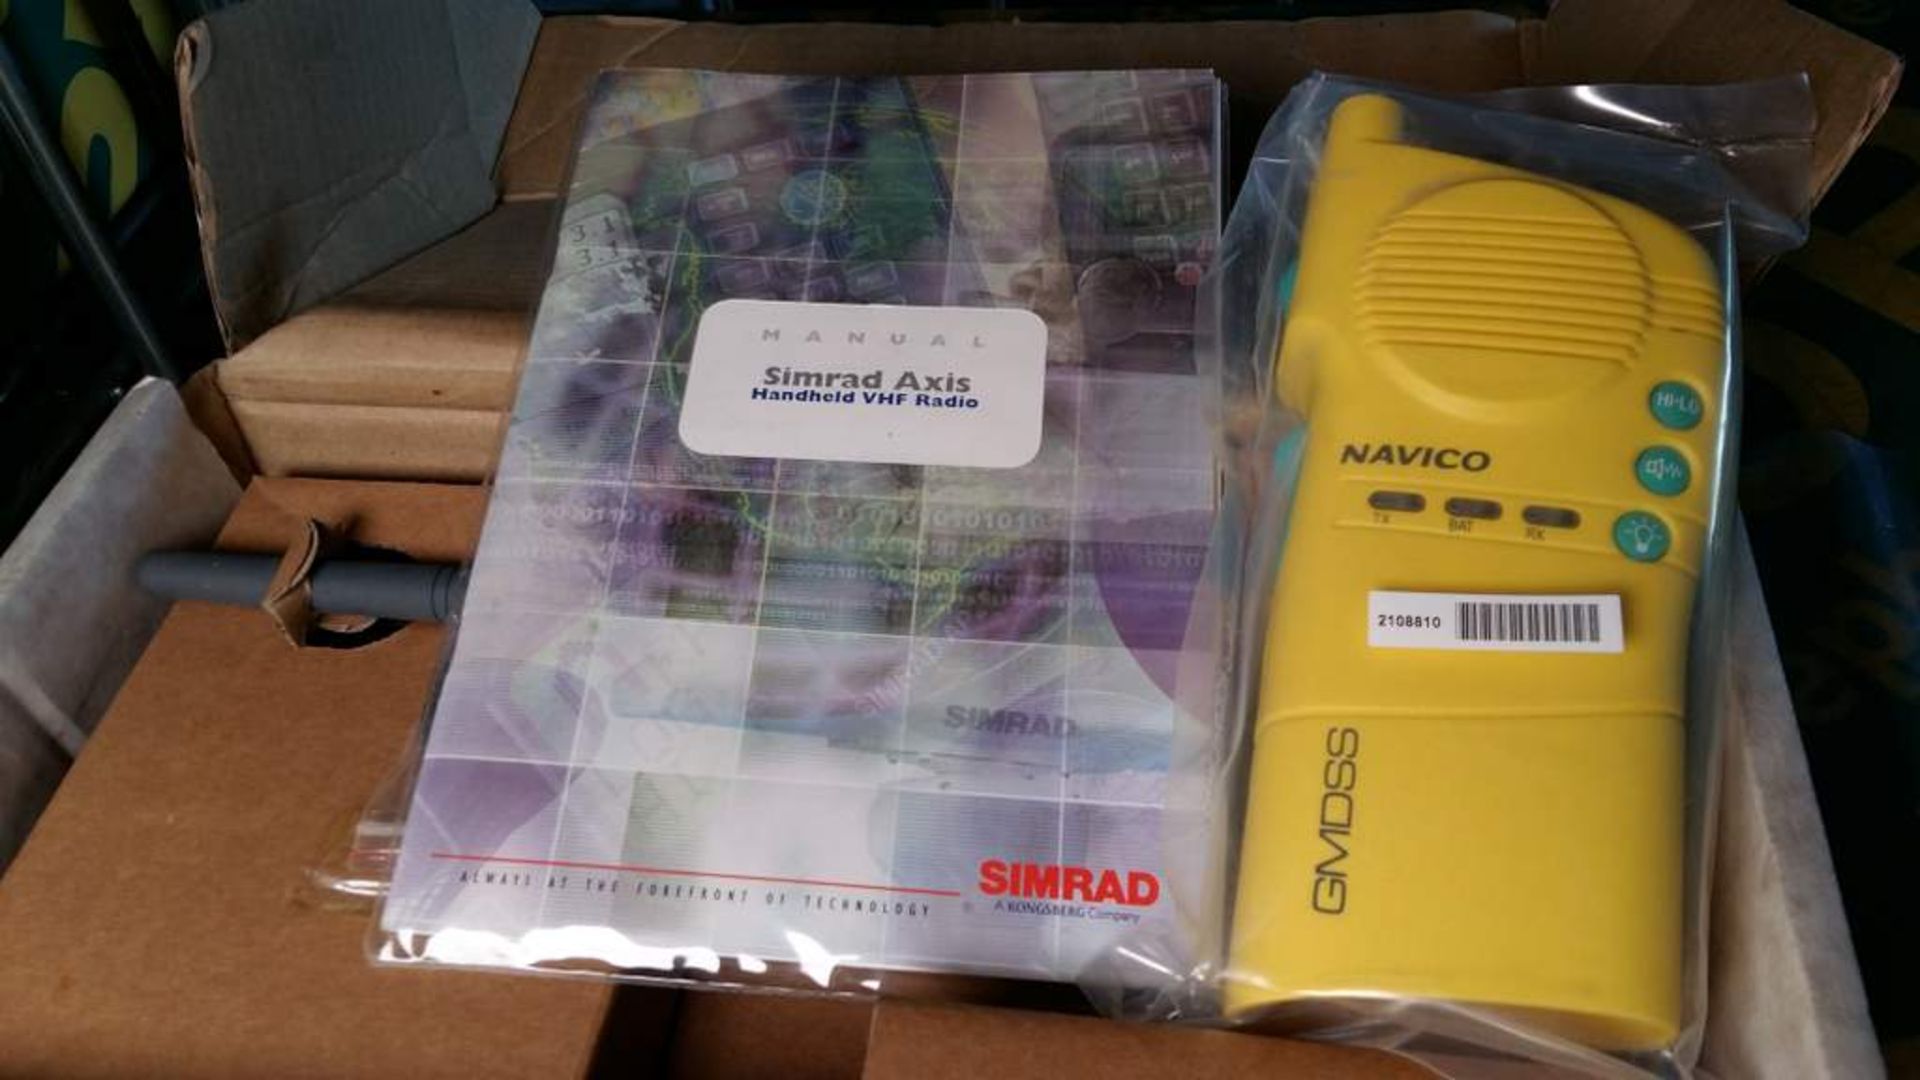 Simrad axis handheld VHF radio 150GMDSS - Image 2 of 2